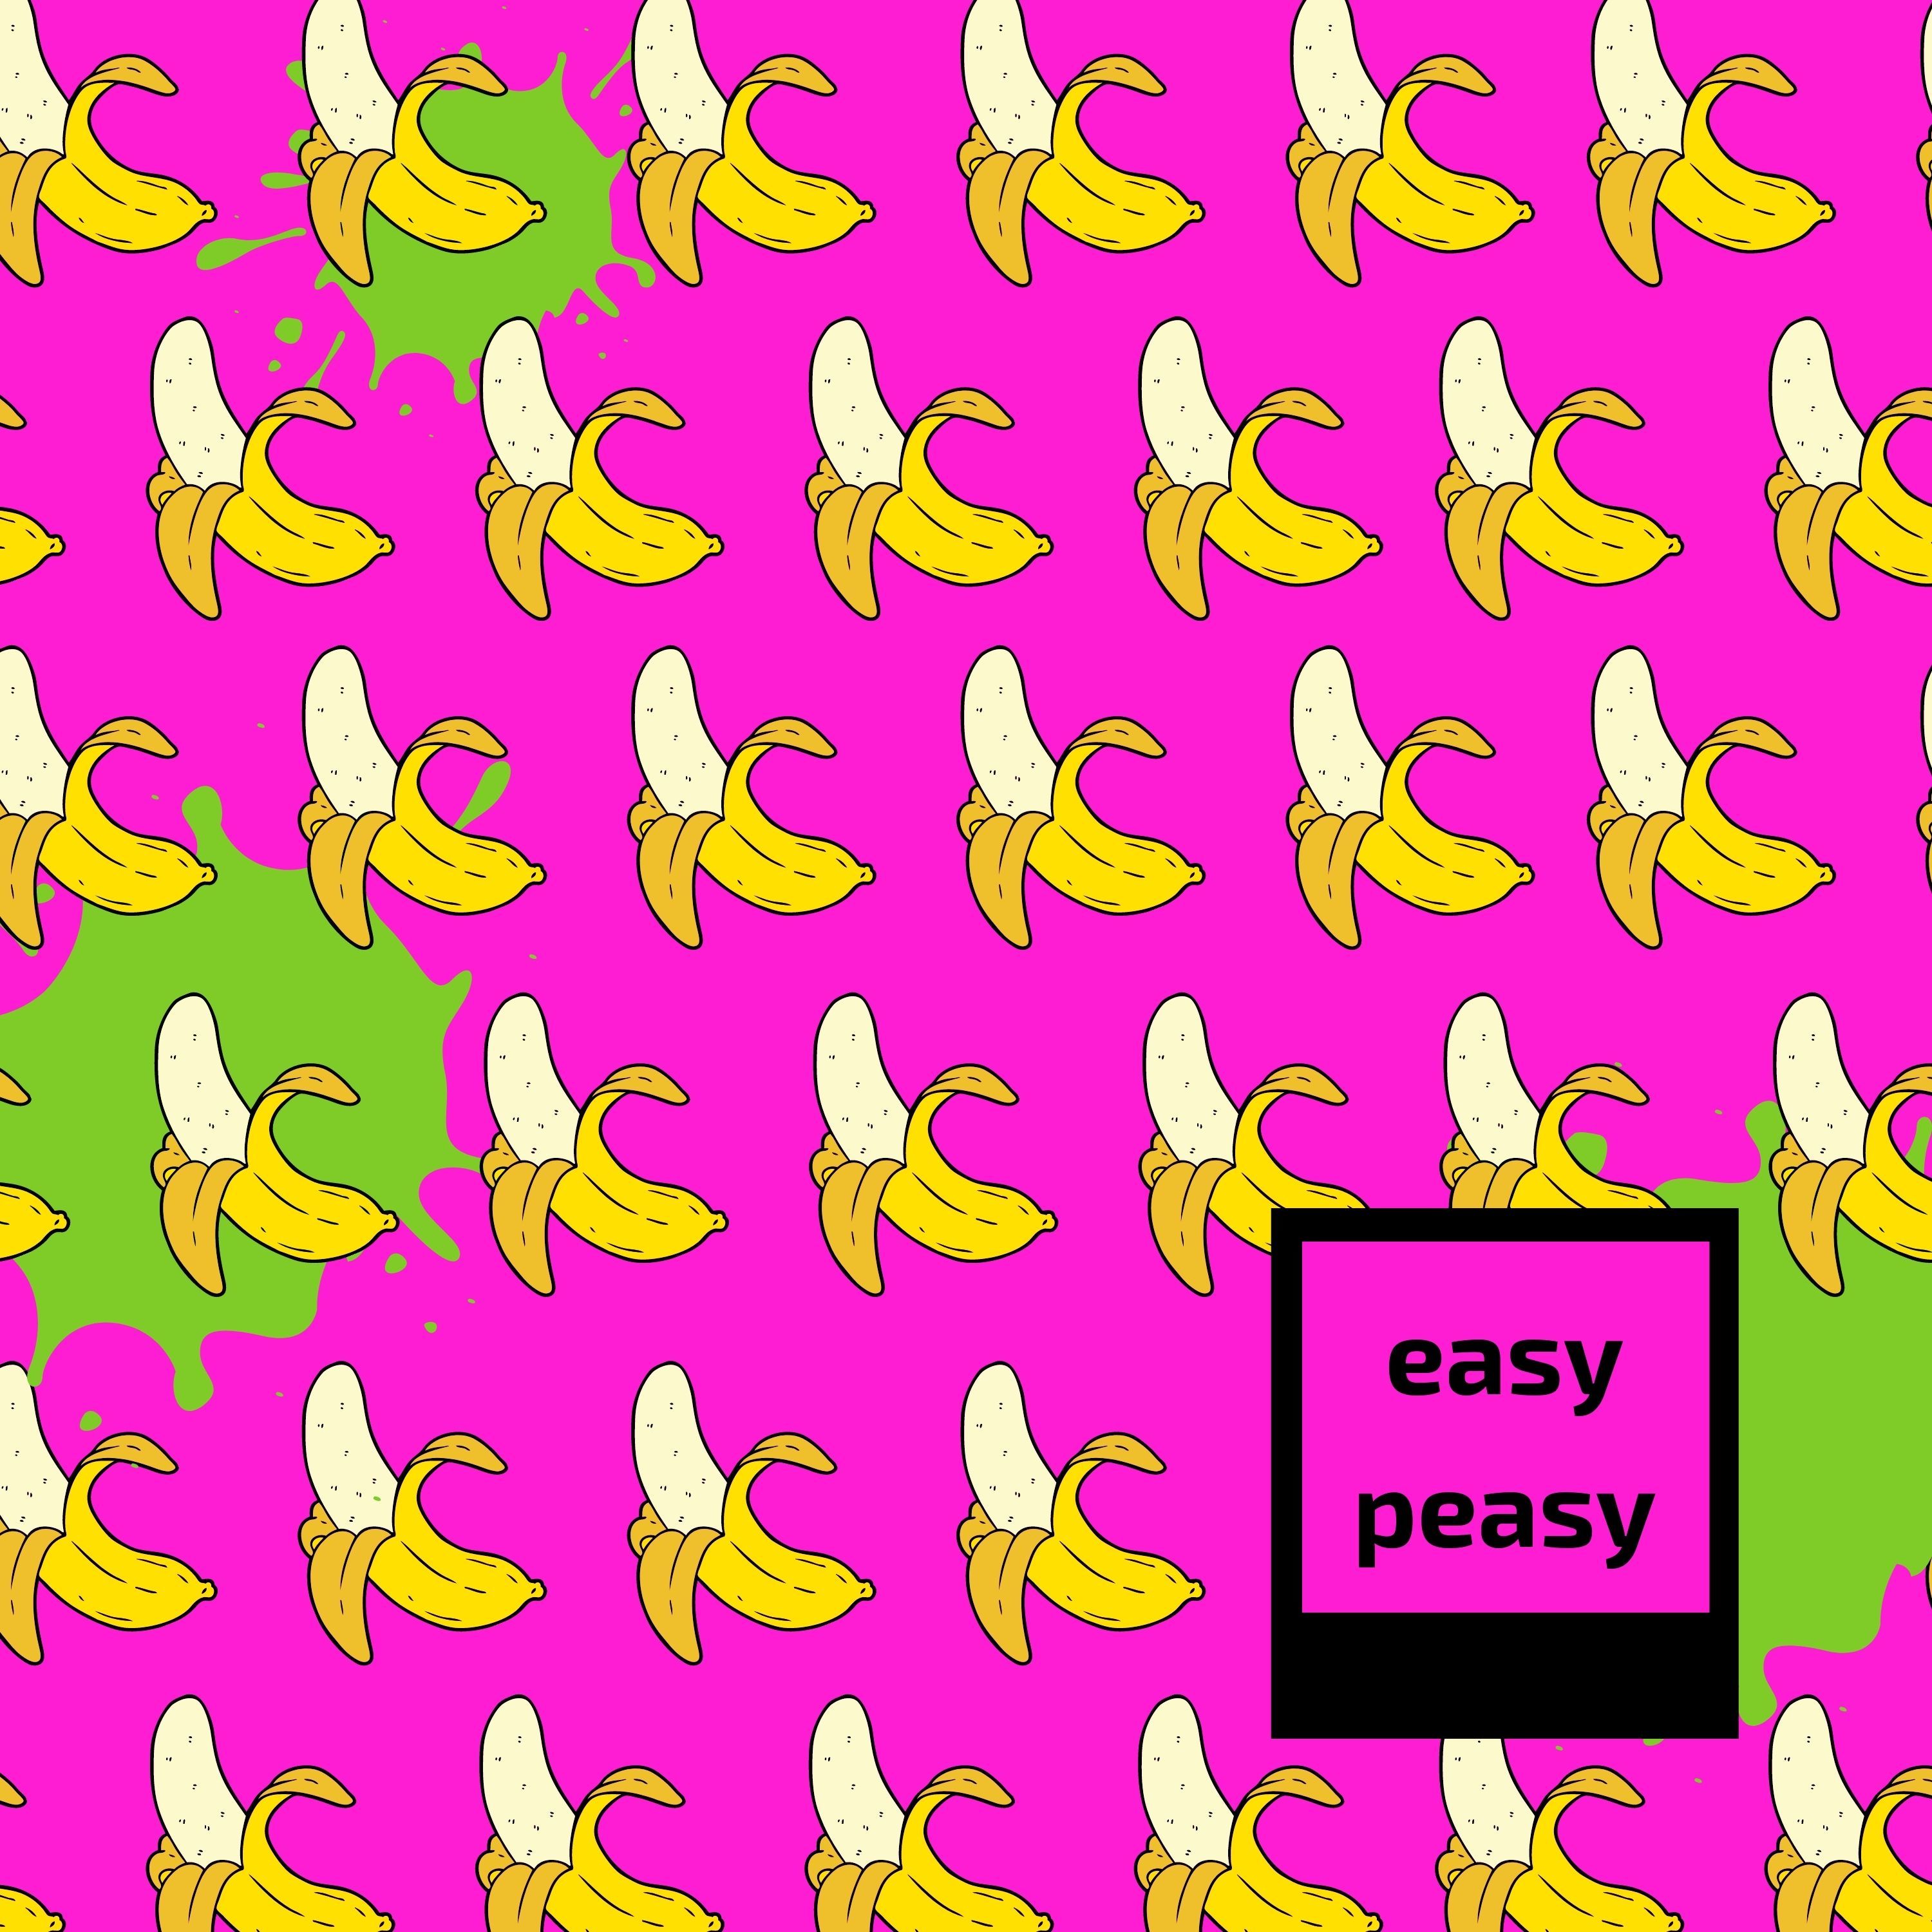 Easy peazy. Easy Peasy. Mp3 easy Peasy.